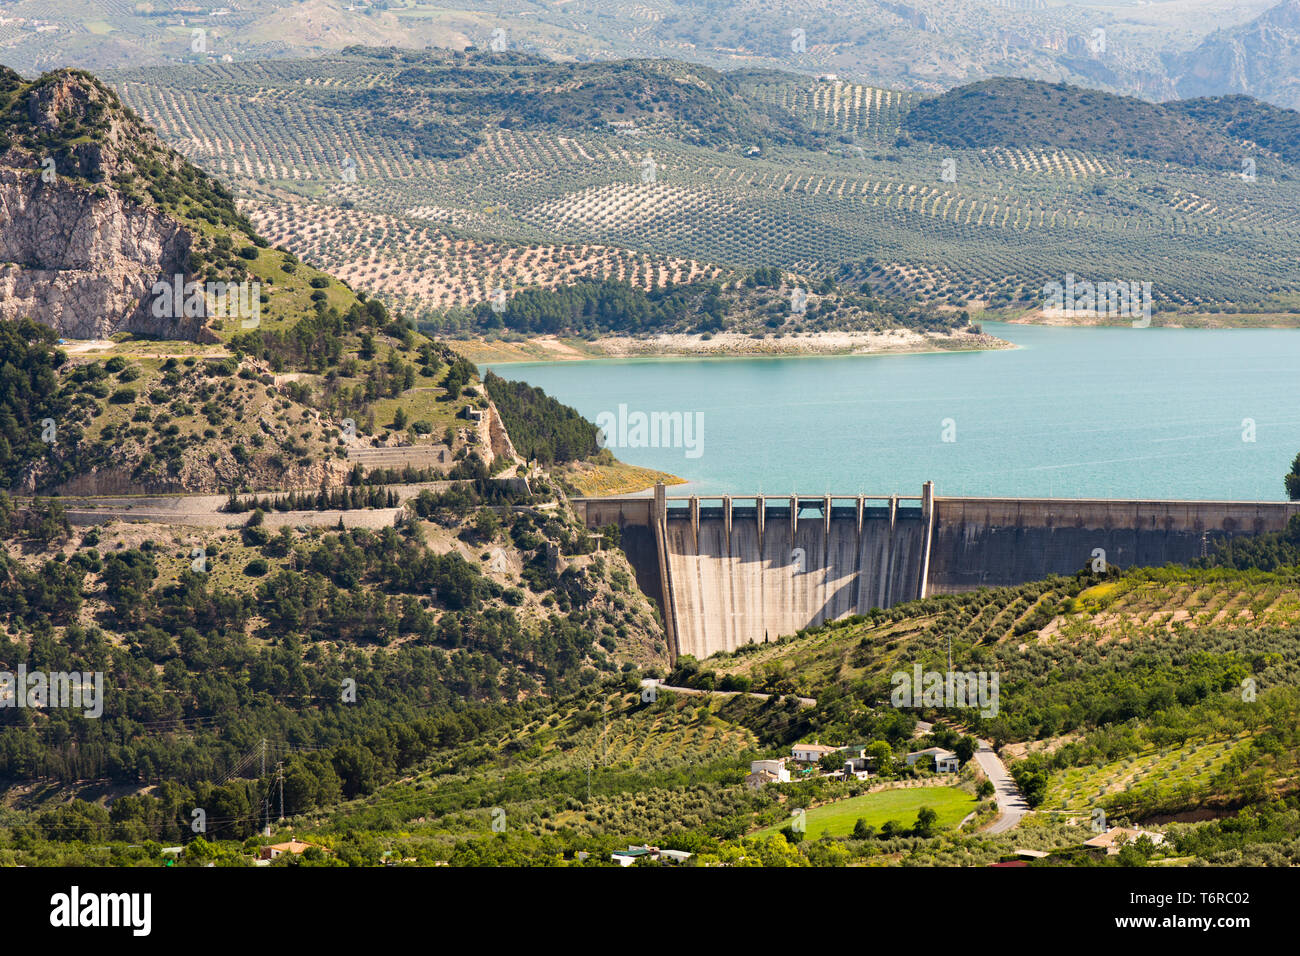 Dam at Iznajar Reservoir, of Geníl river, providing electricity, Cordoba province, Spain. Stock Photo